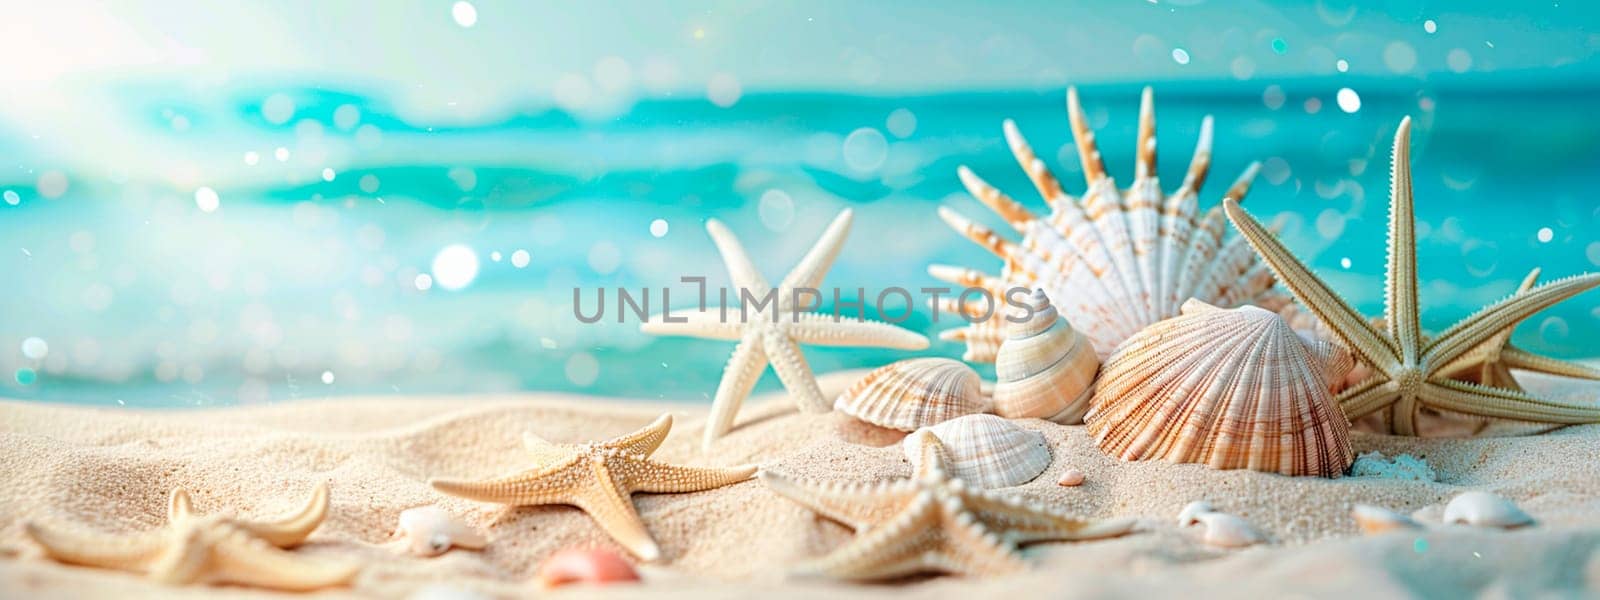 starfish and shells on the seashore. selective focus. nature.